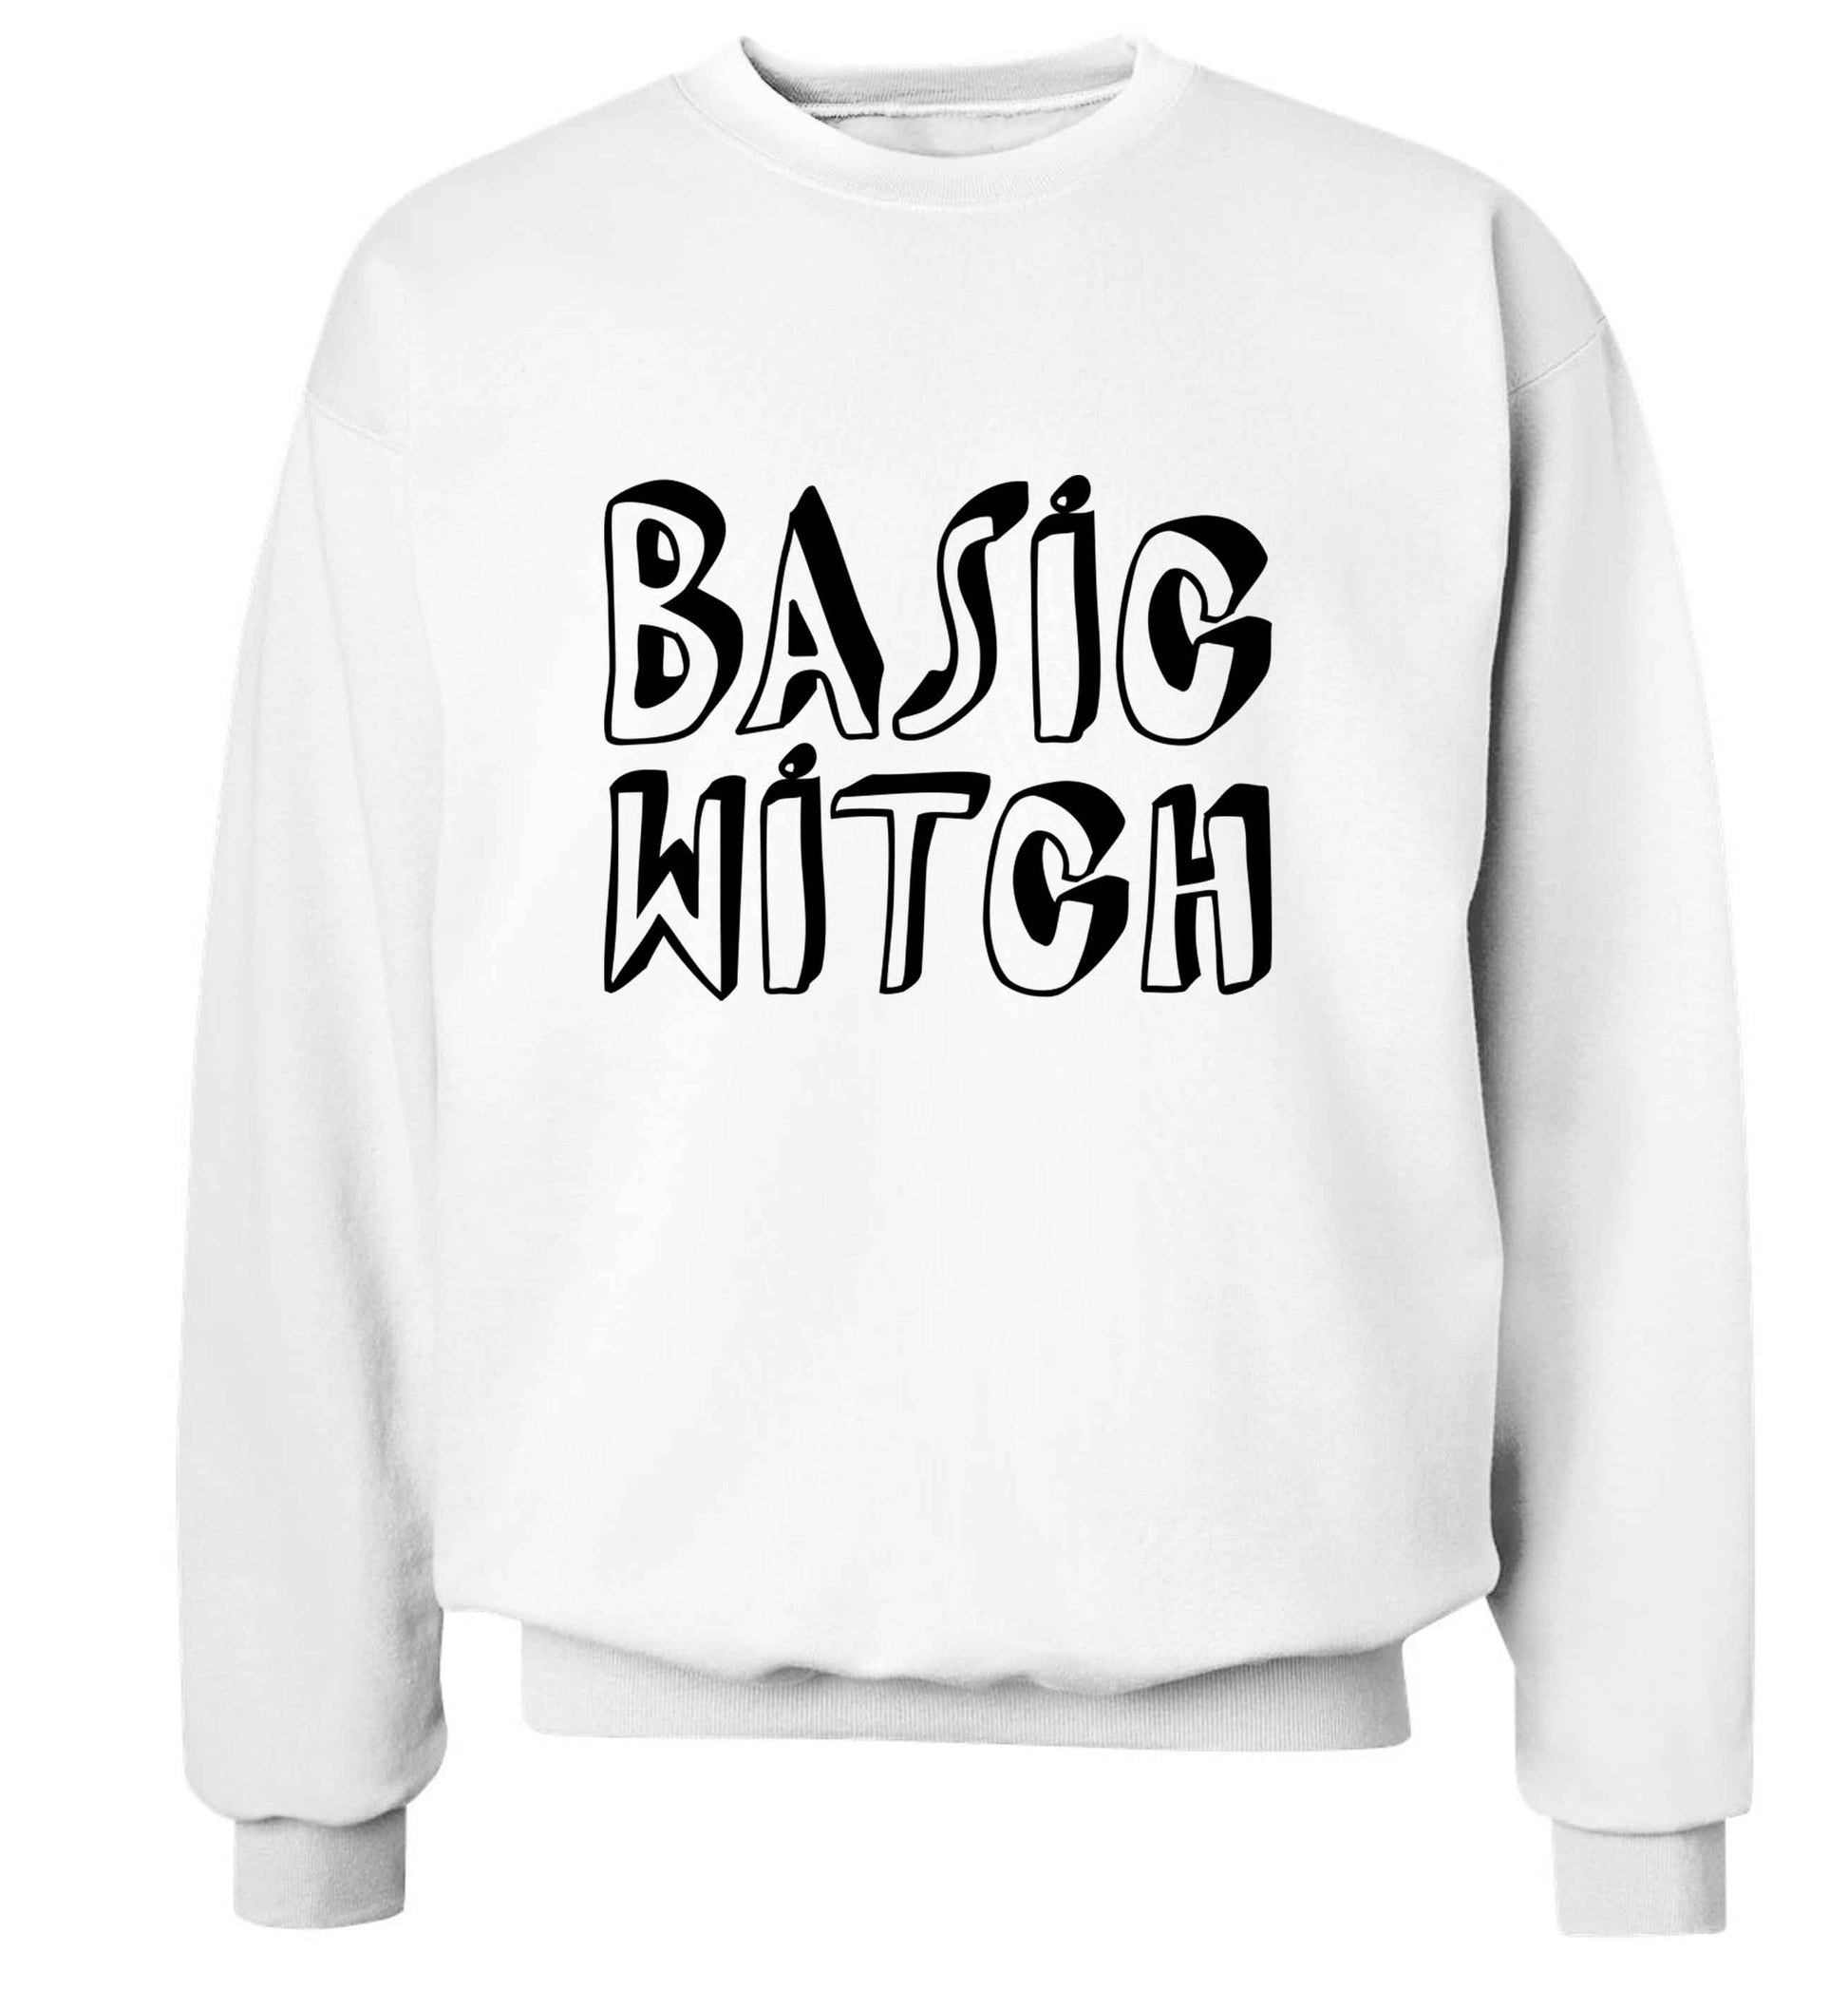 Basic witch adult's unisex white sweater 2XL